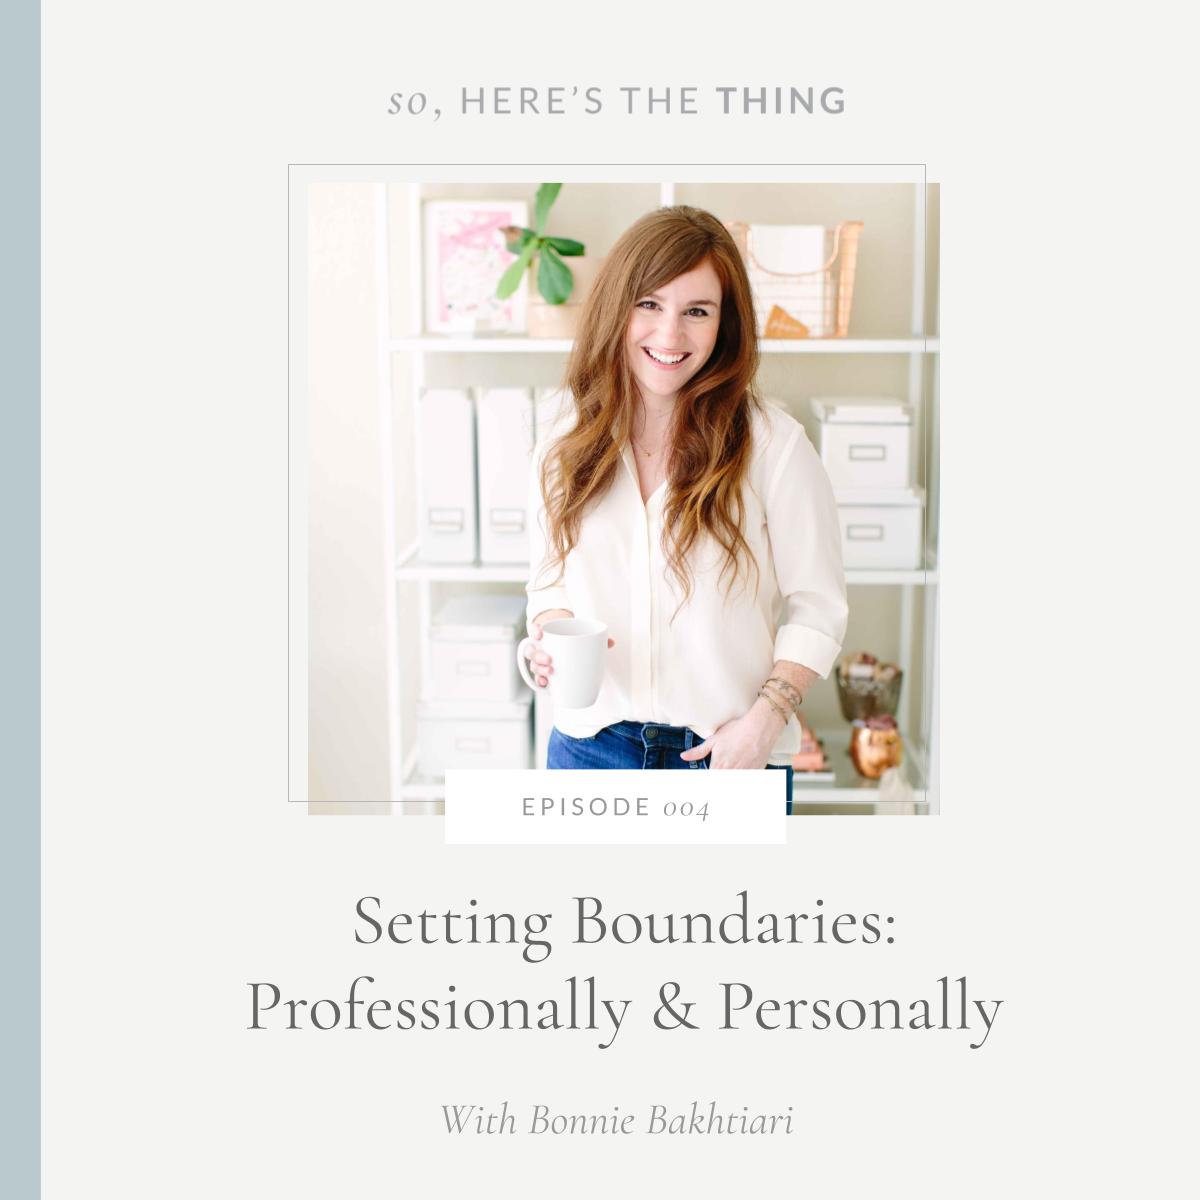 Boundaries with Bonnie Bakhtiari